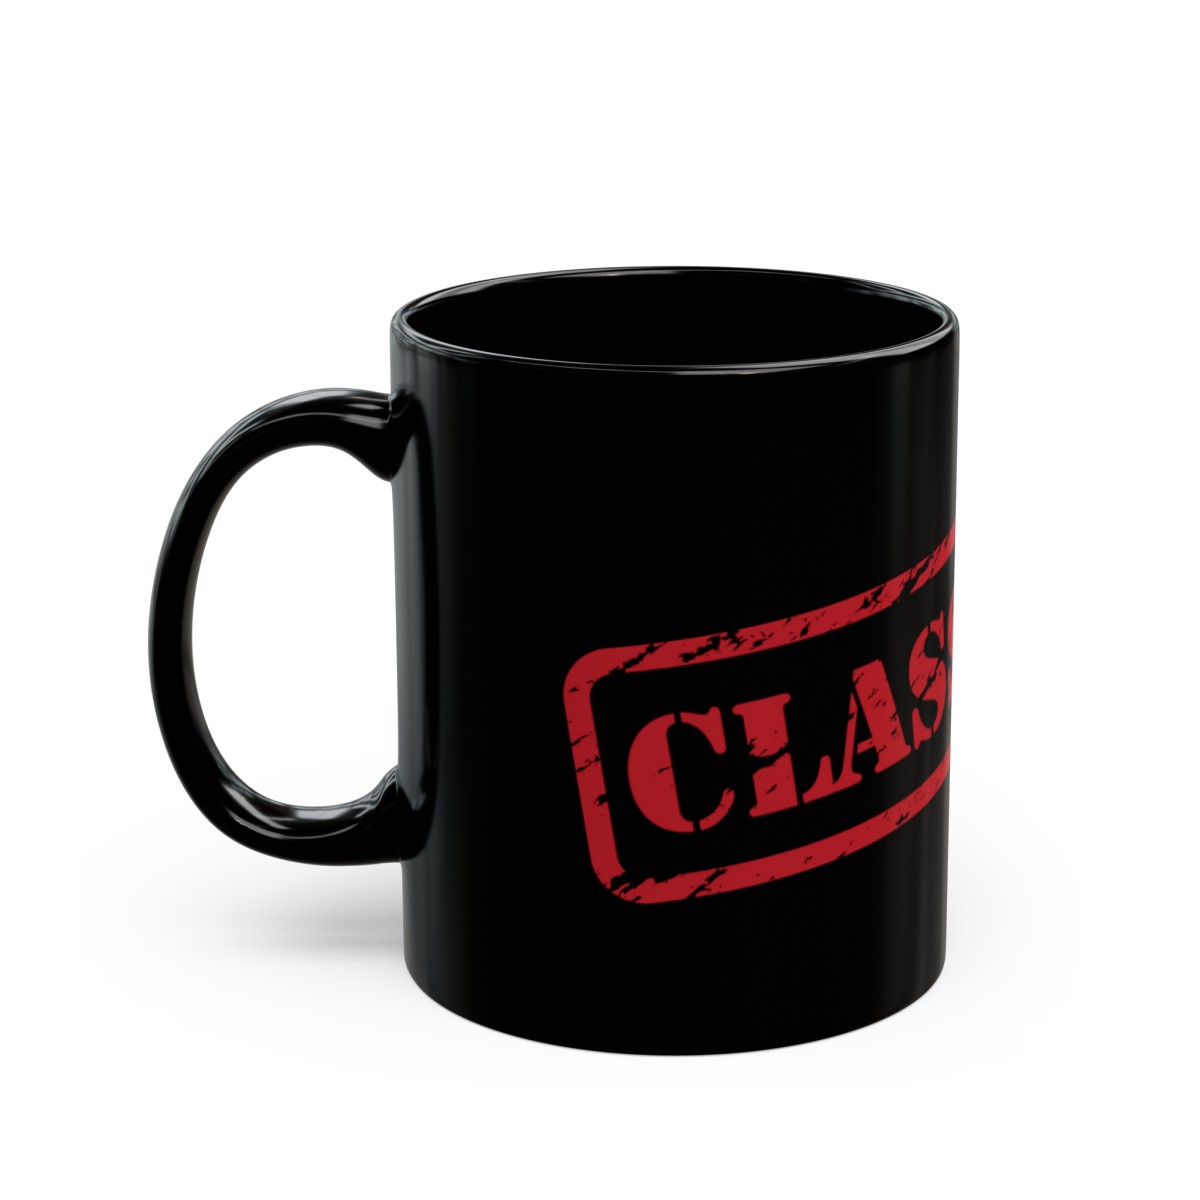 "Classified" 11oz Black Mug product thumbnail image